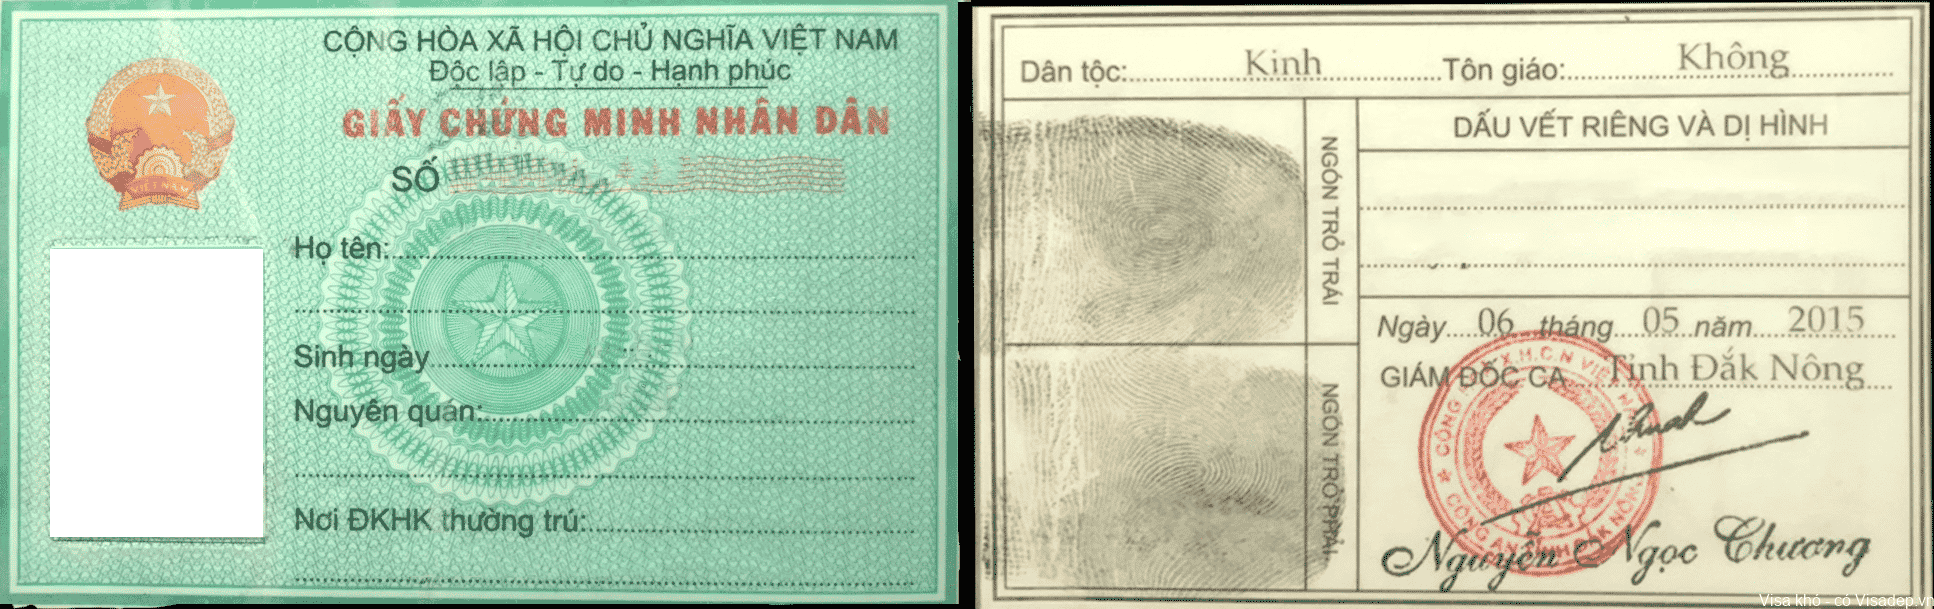 Ma So Chung Minh Nhan Dan Cua Cac Tinh Thanh (cap Nhat 2022) 1